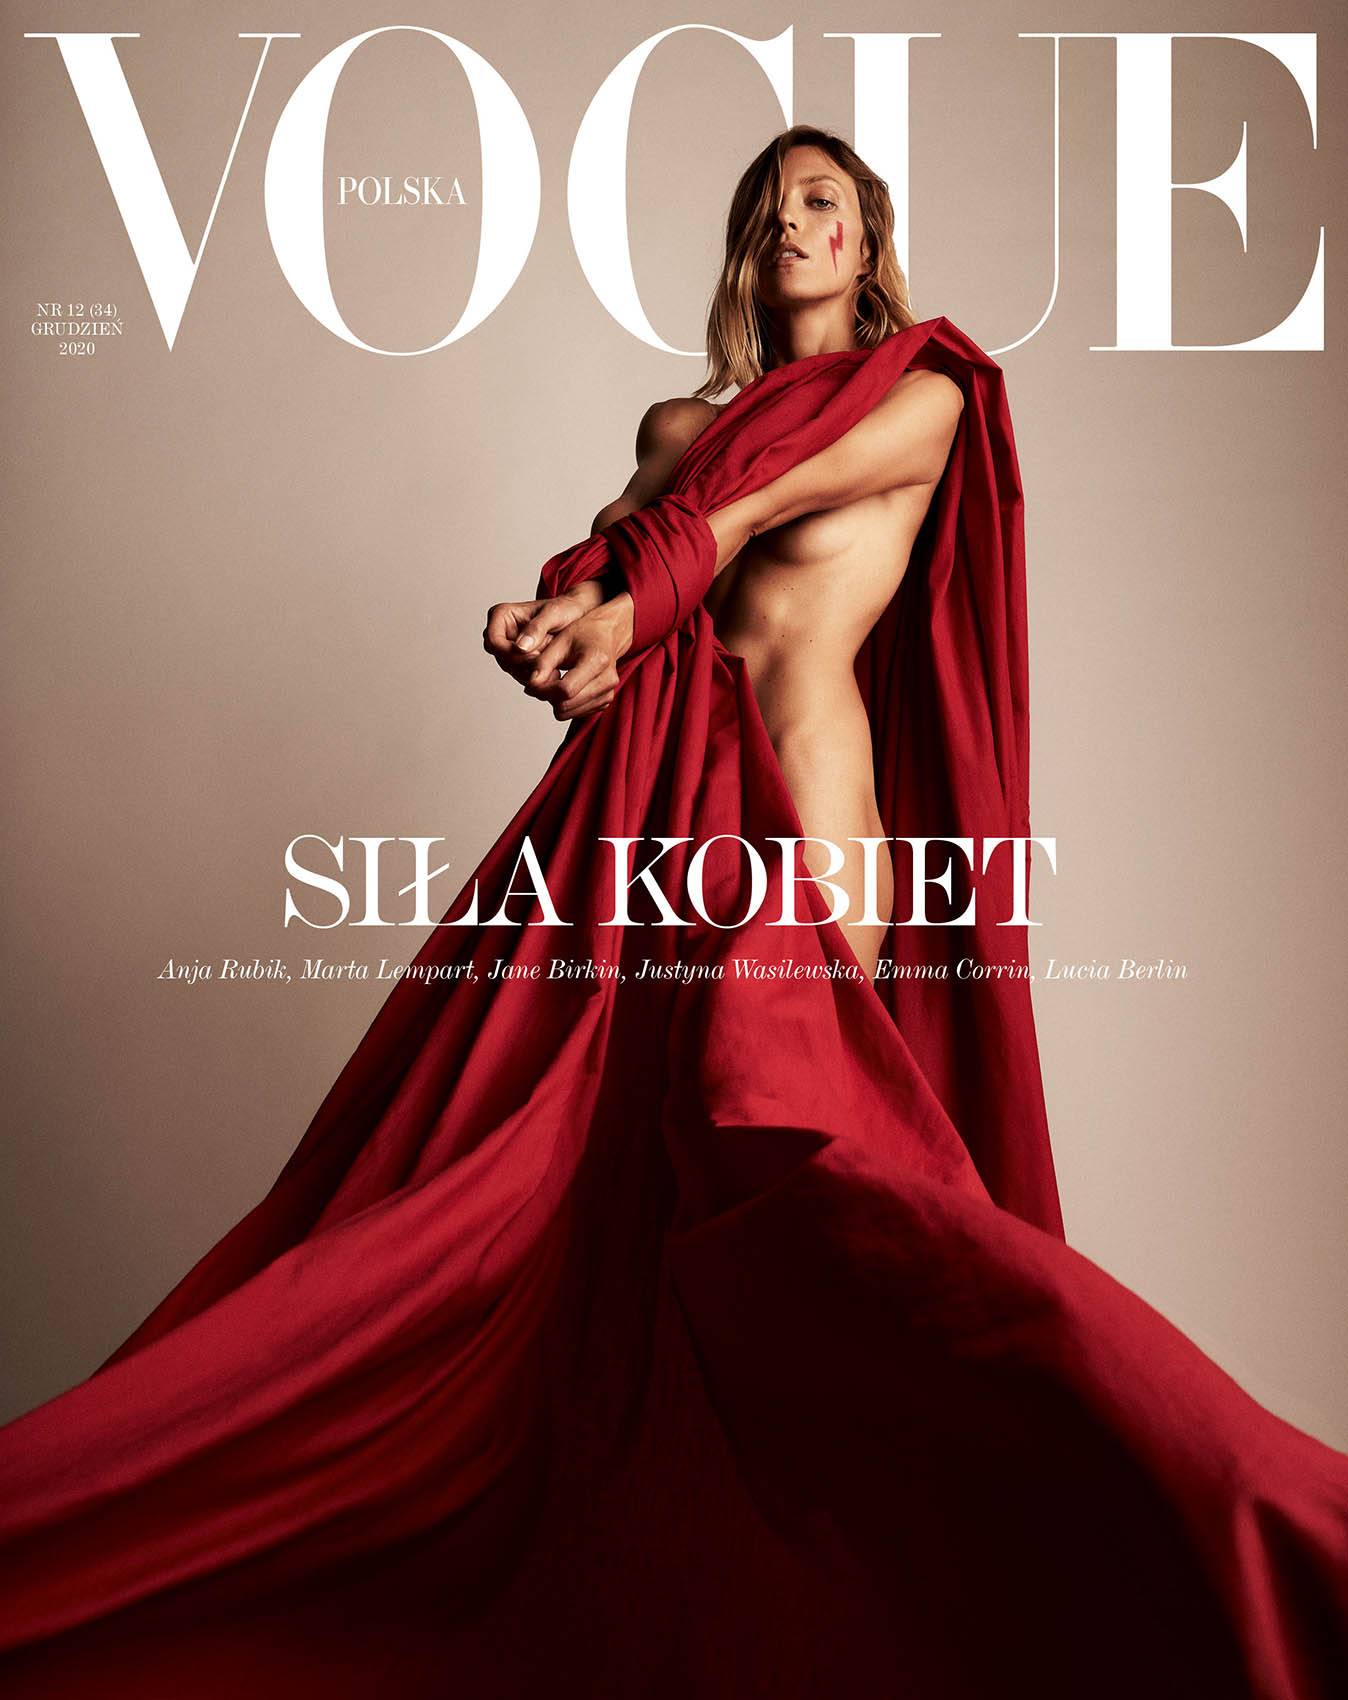 Prenumerata Vogue Polska, cena 14,50 zł miesięcznie (Fot. Materiały prasowe)